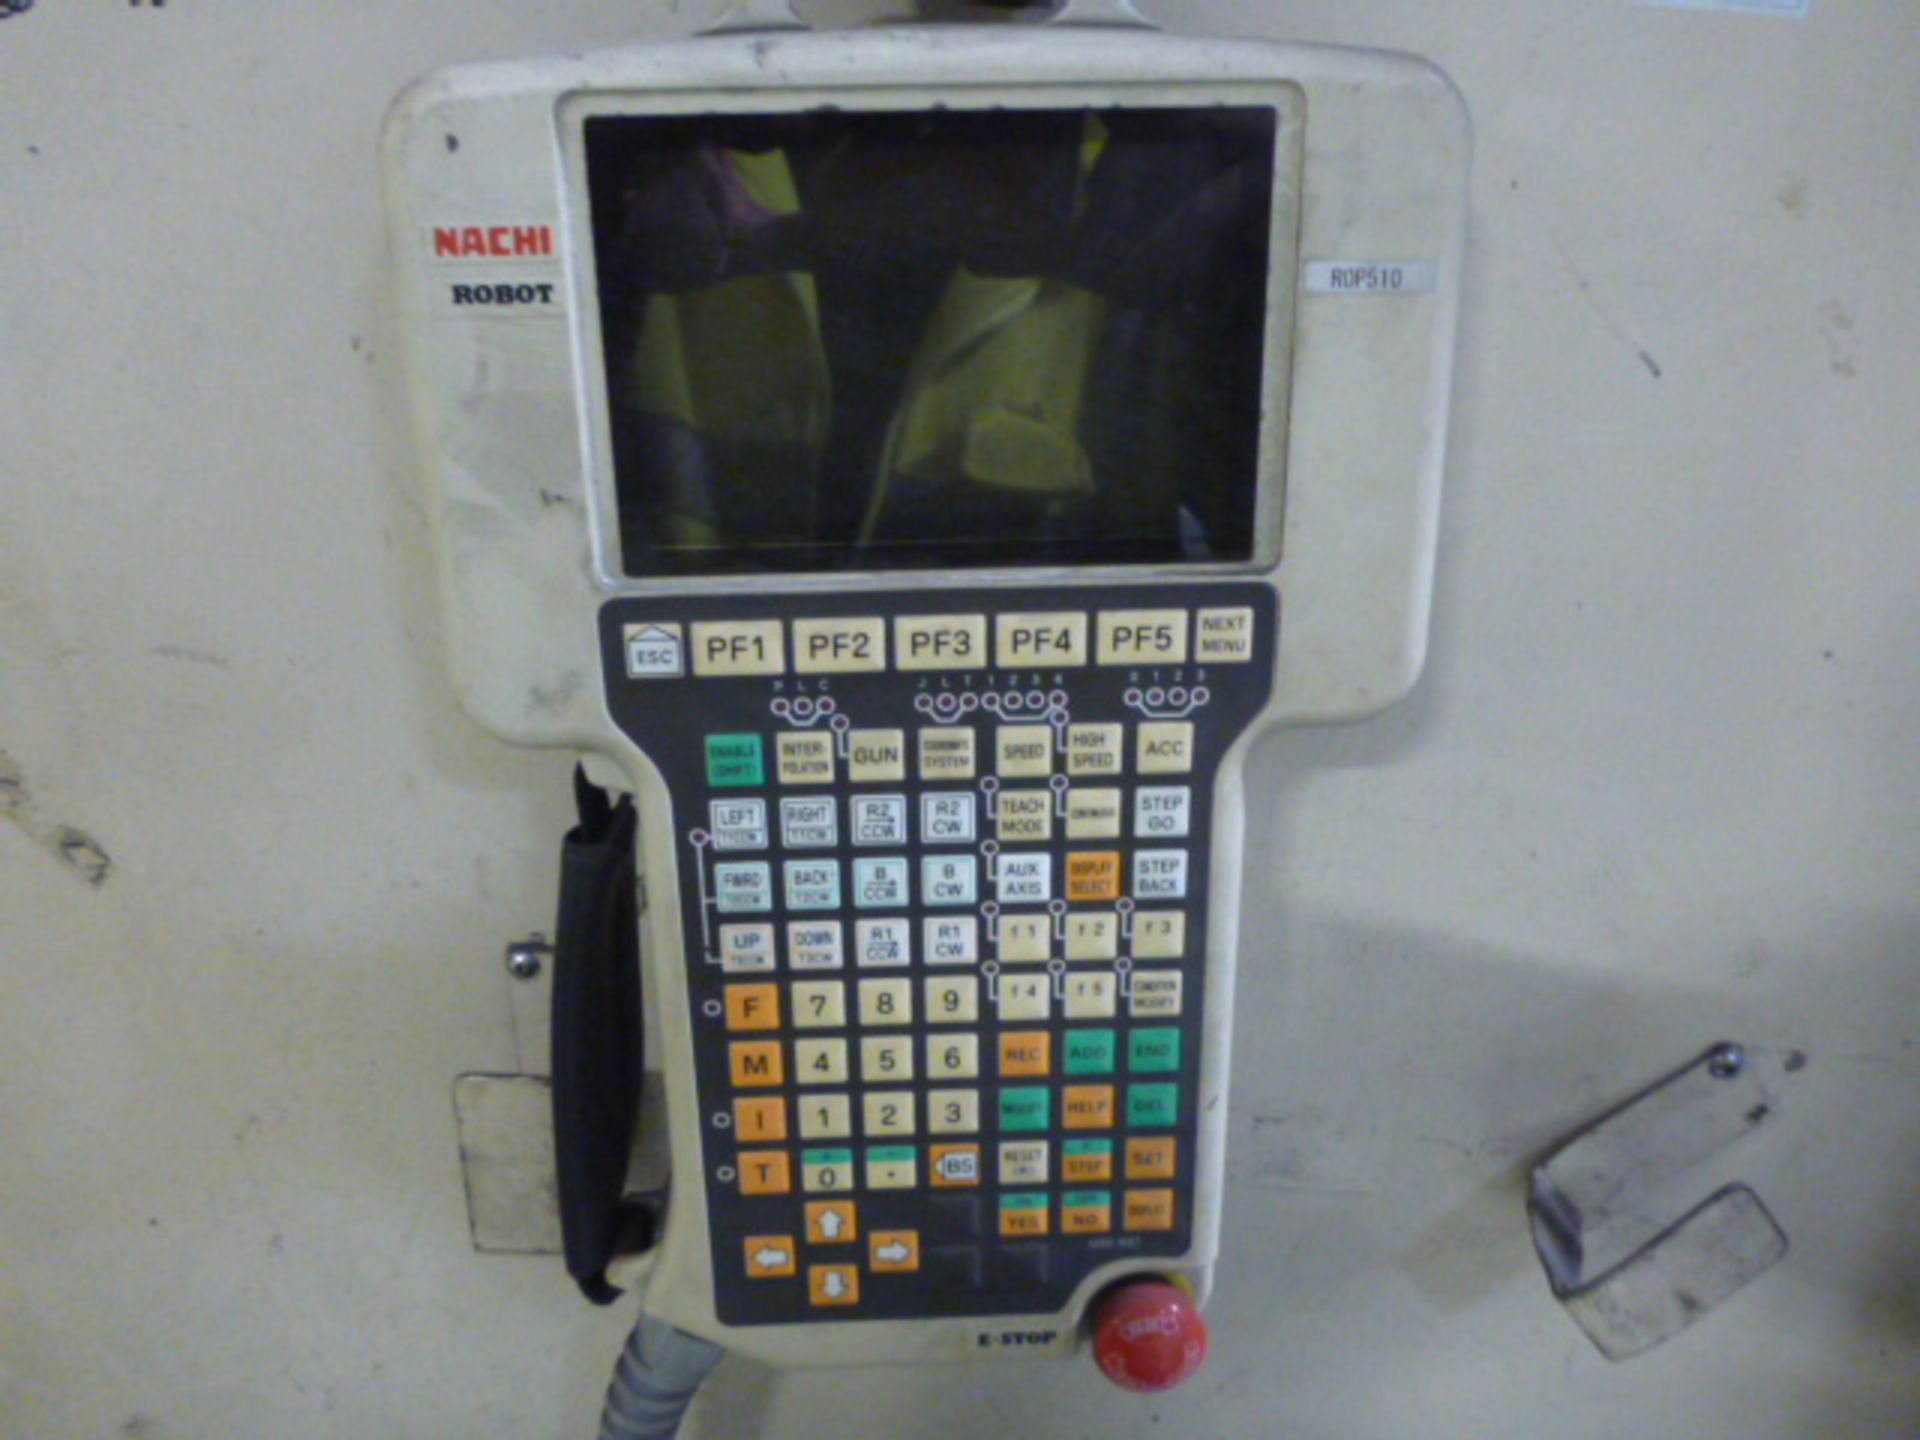 Nachi SF130F-01 Robotic Spot Welding Machine (1997) (Cell AM07) - Image 6 of 8